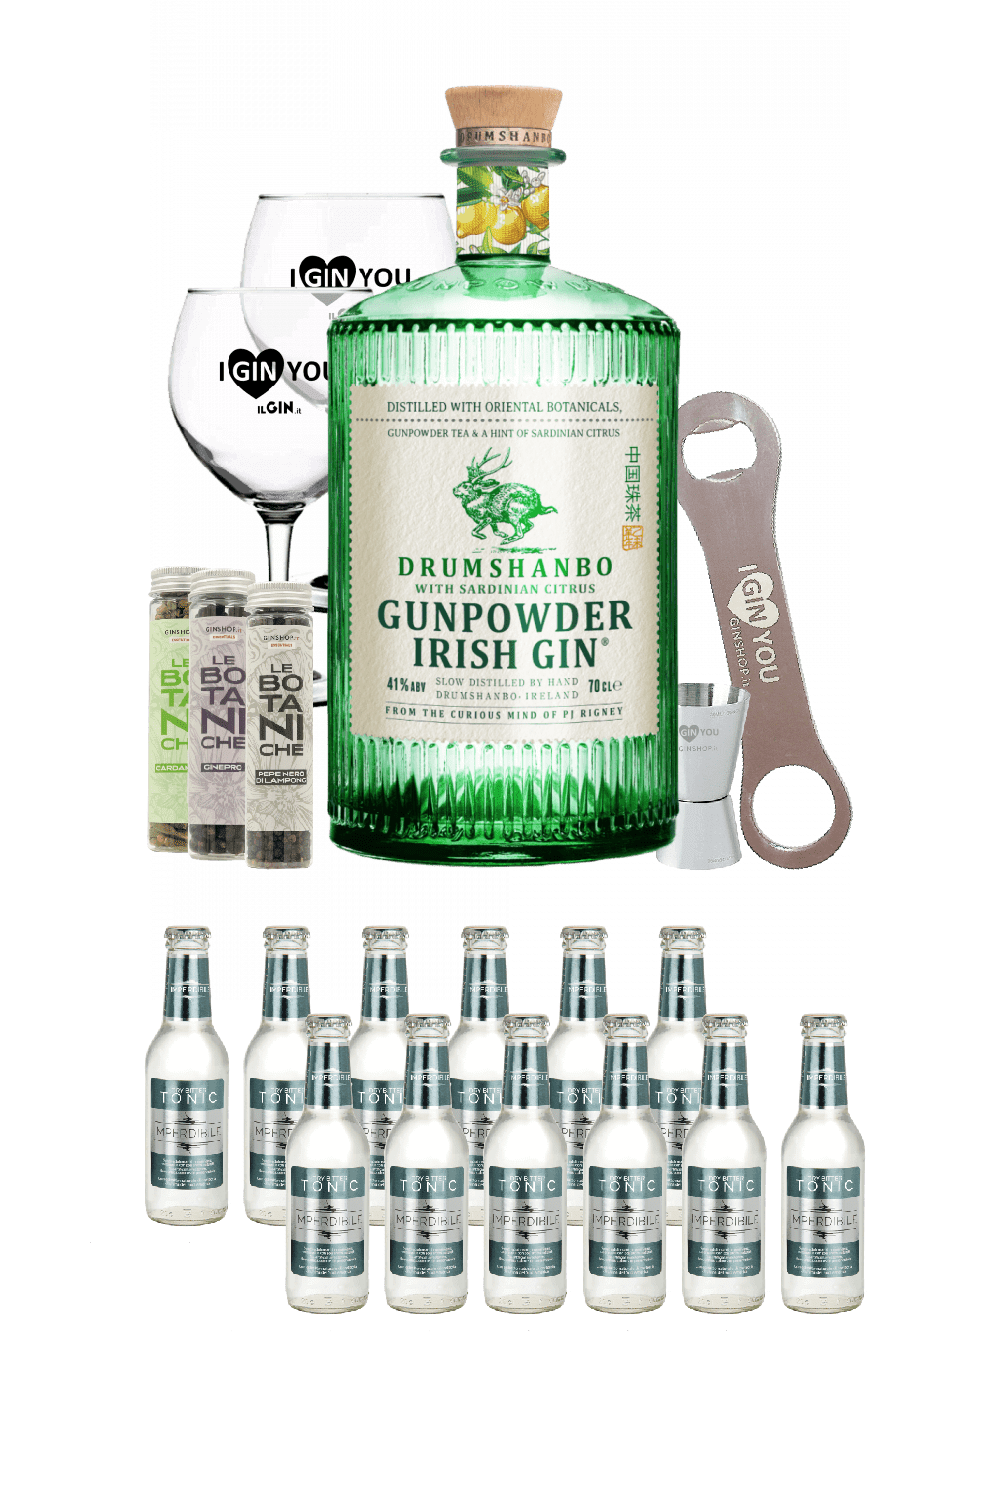 Gunpowder irish